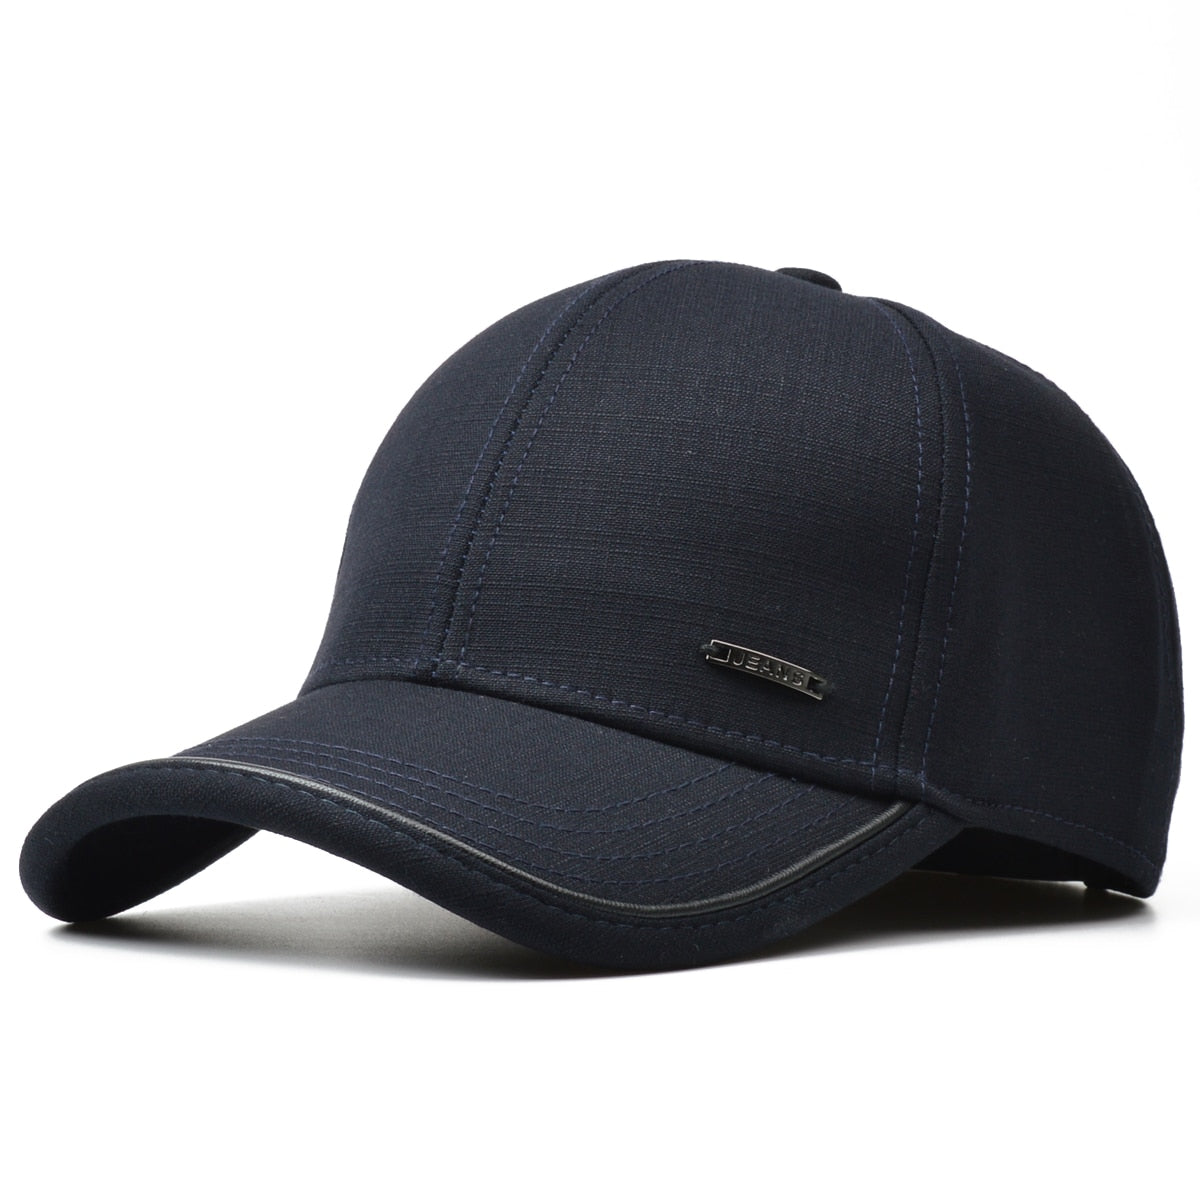 Brand Men's Caps Solid Cotton Baseball Cap Male Golf Snapback Casual Trucker Hats Adjustable Gorras Hombre for Outdoor